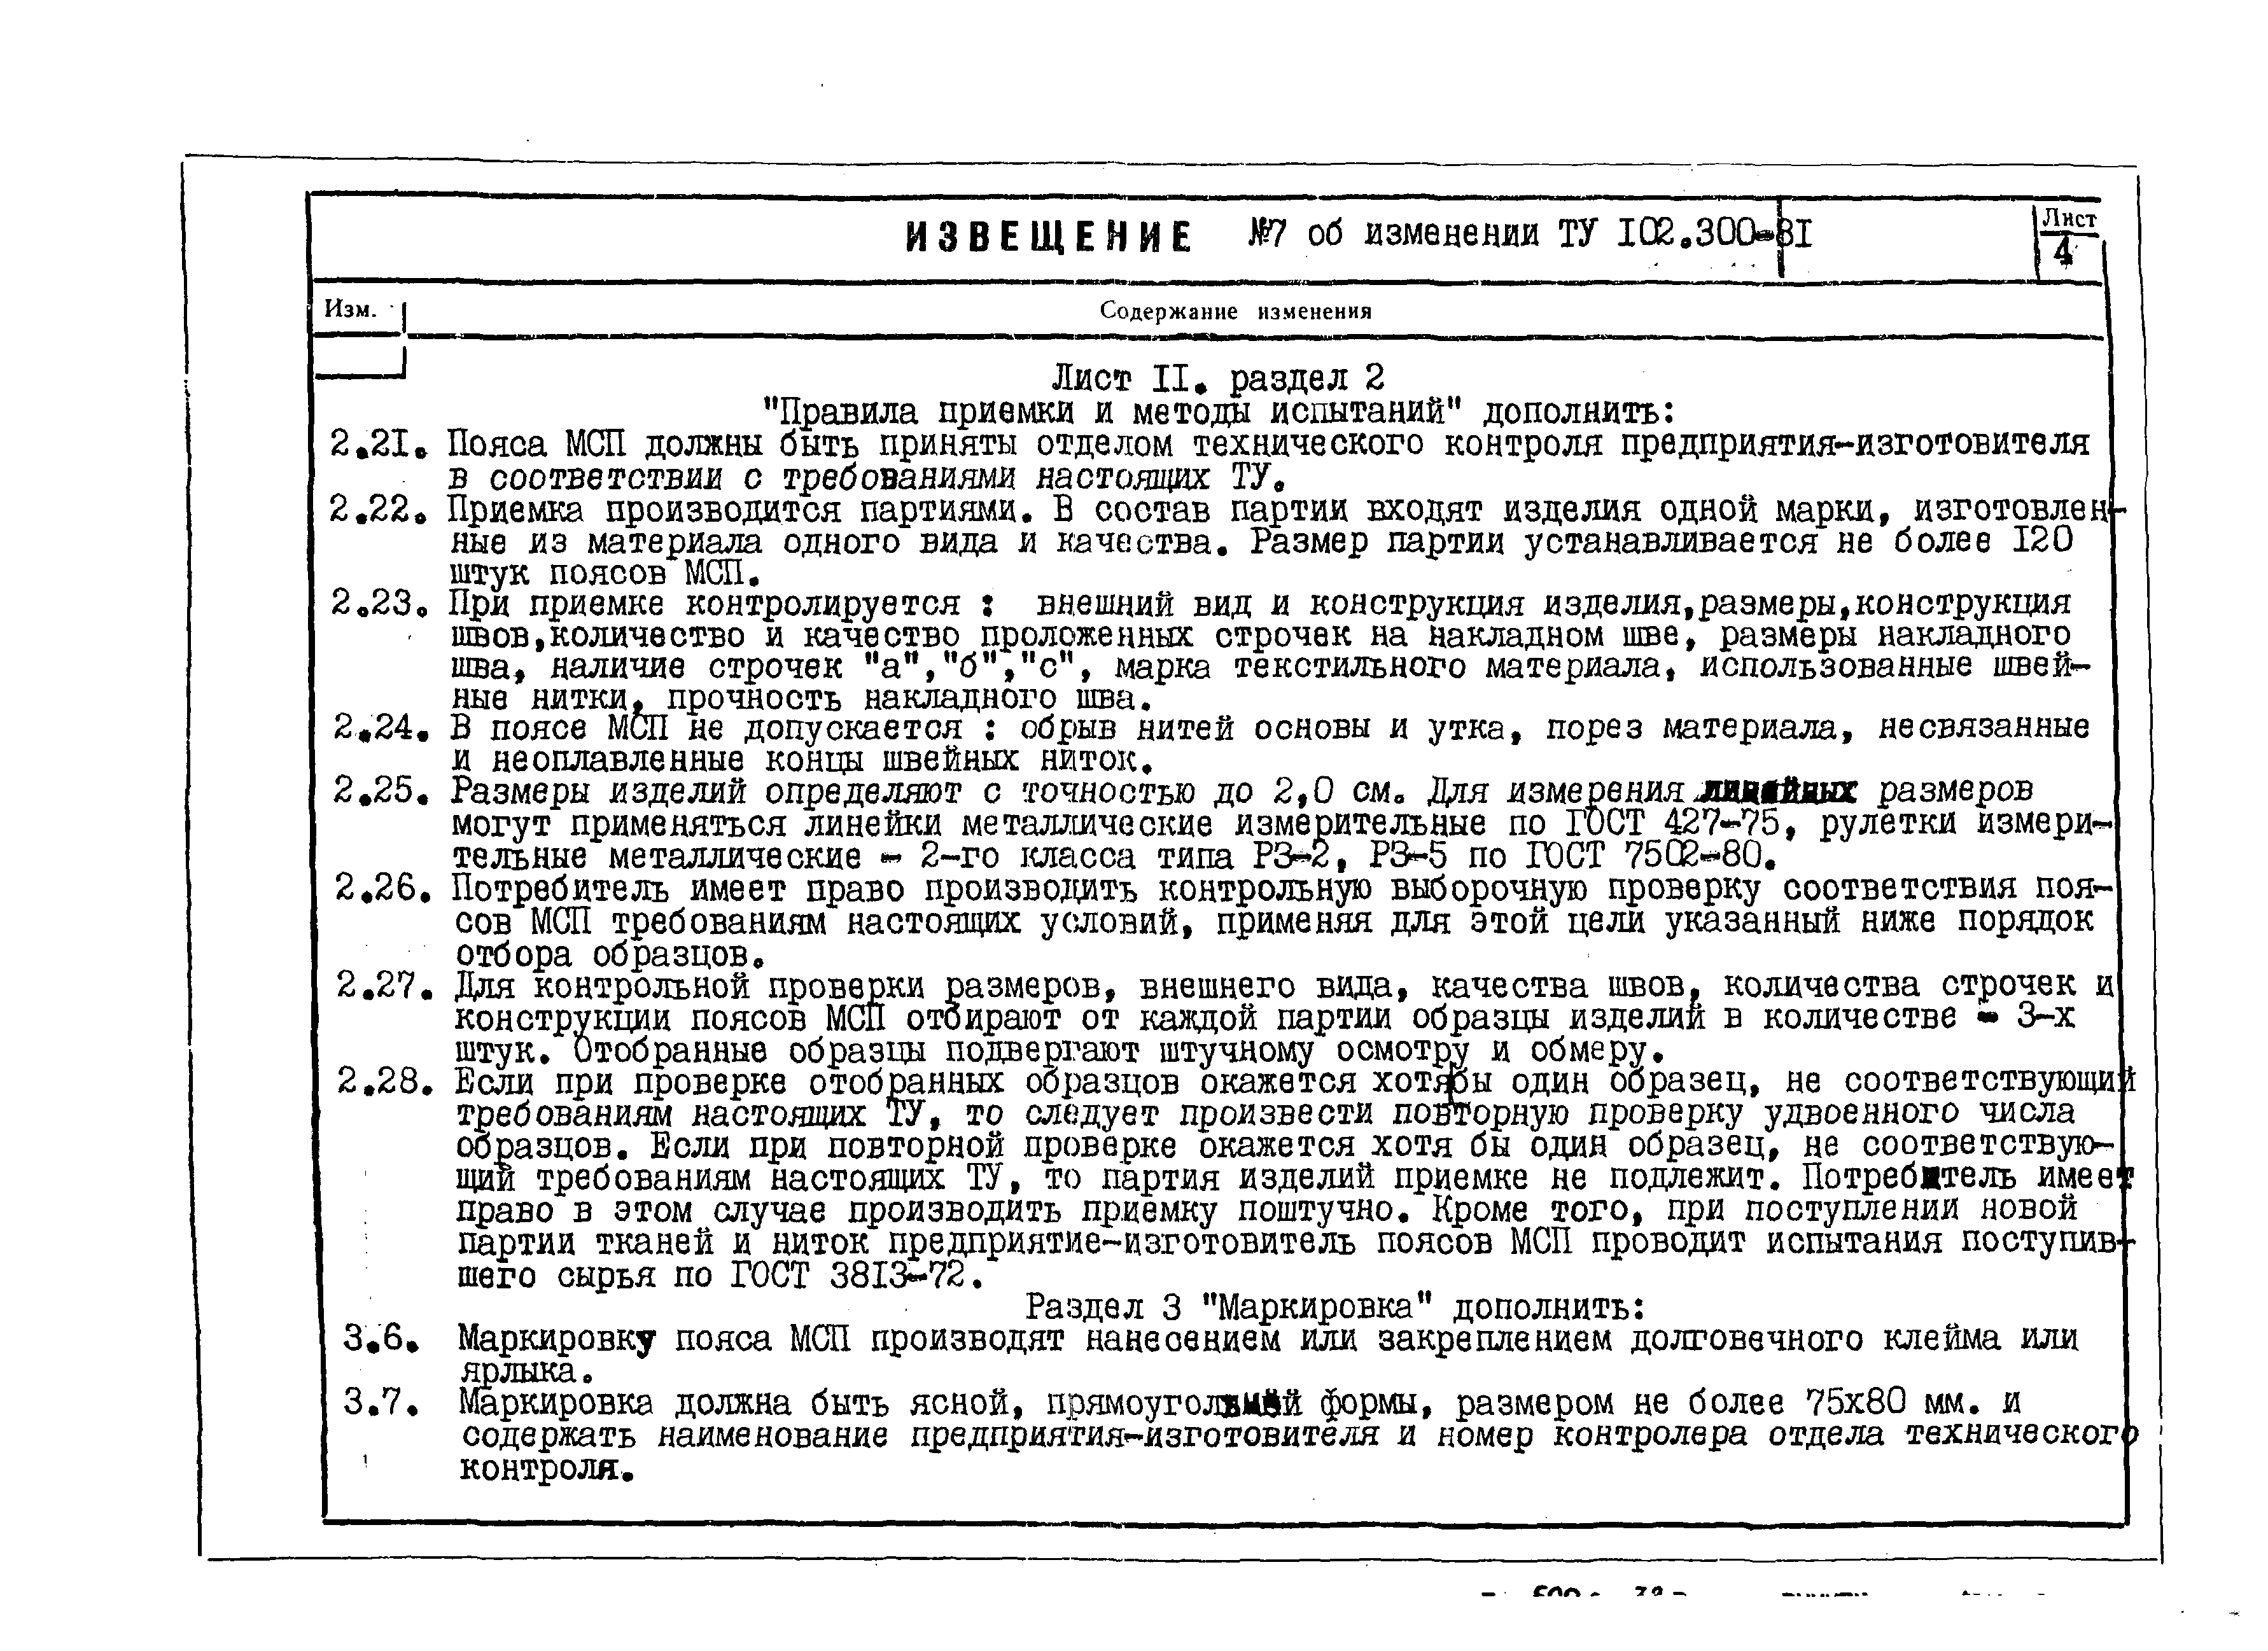 ТУ 102-300-81